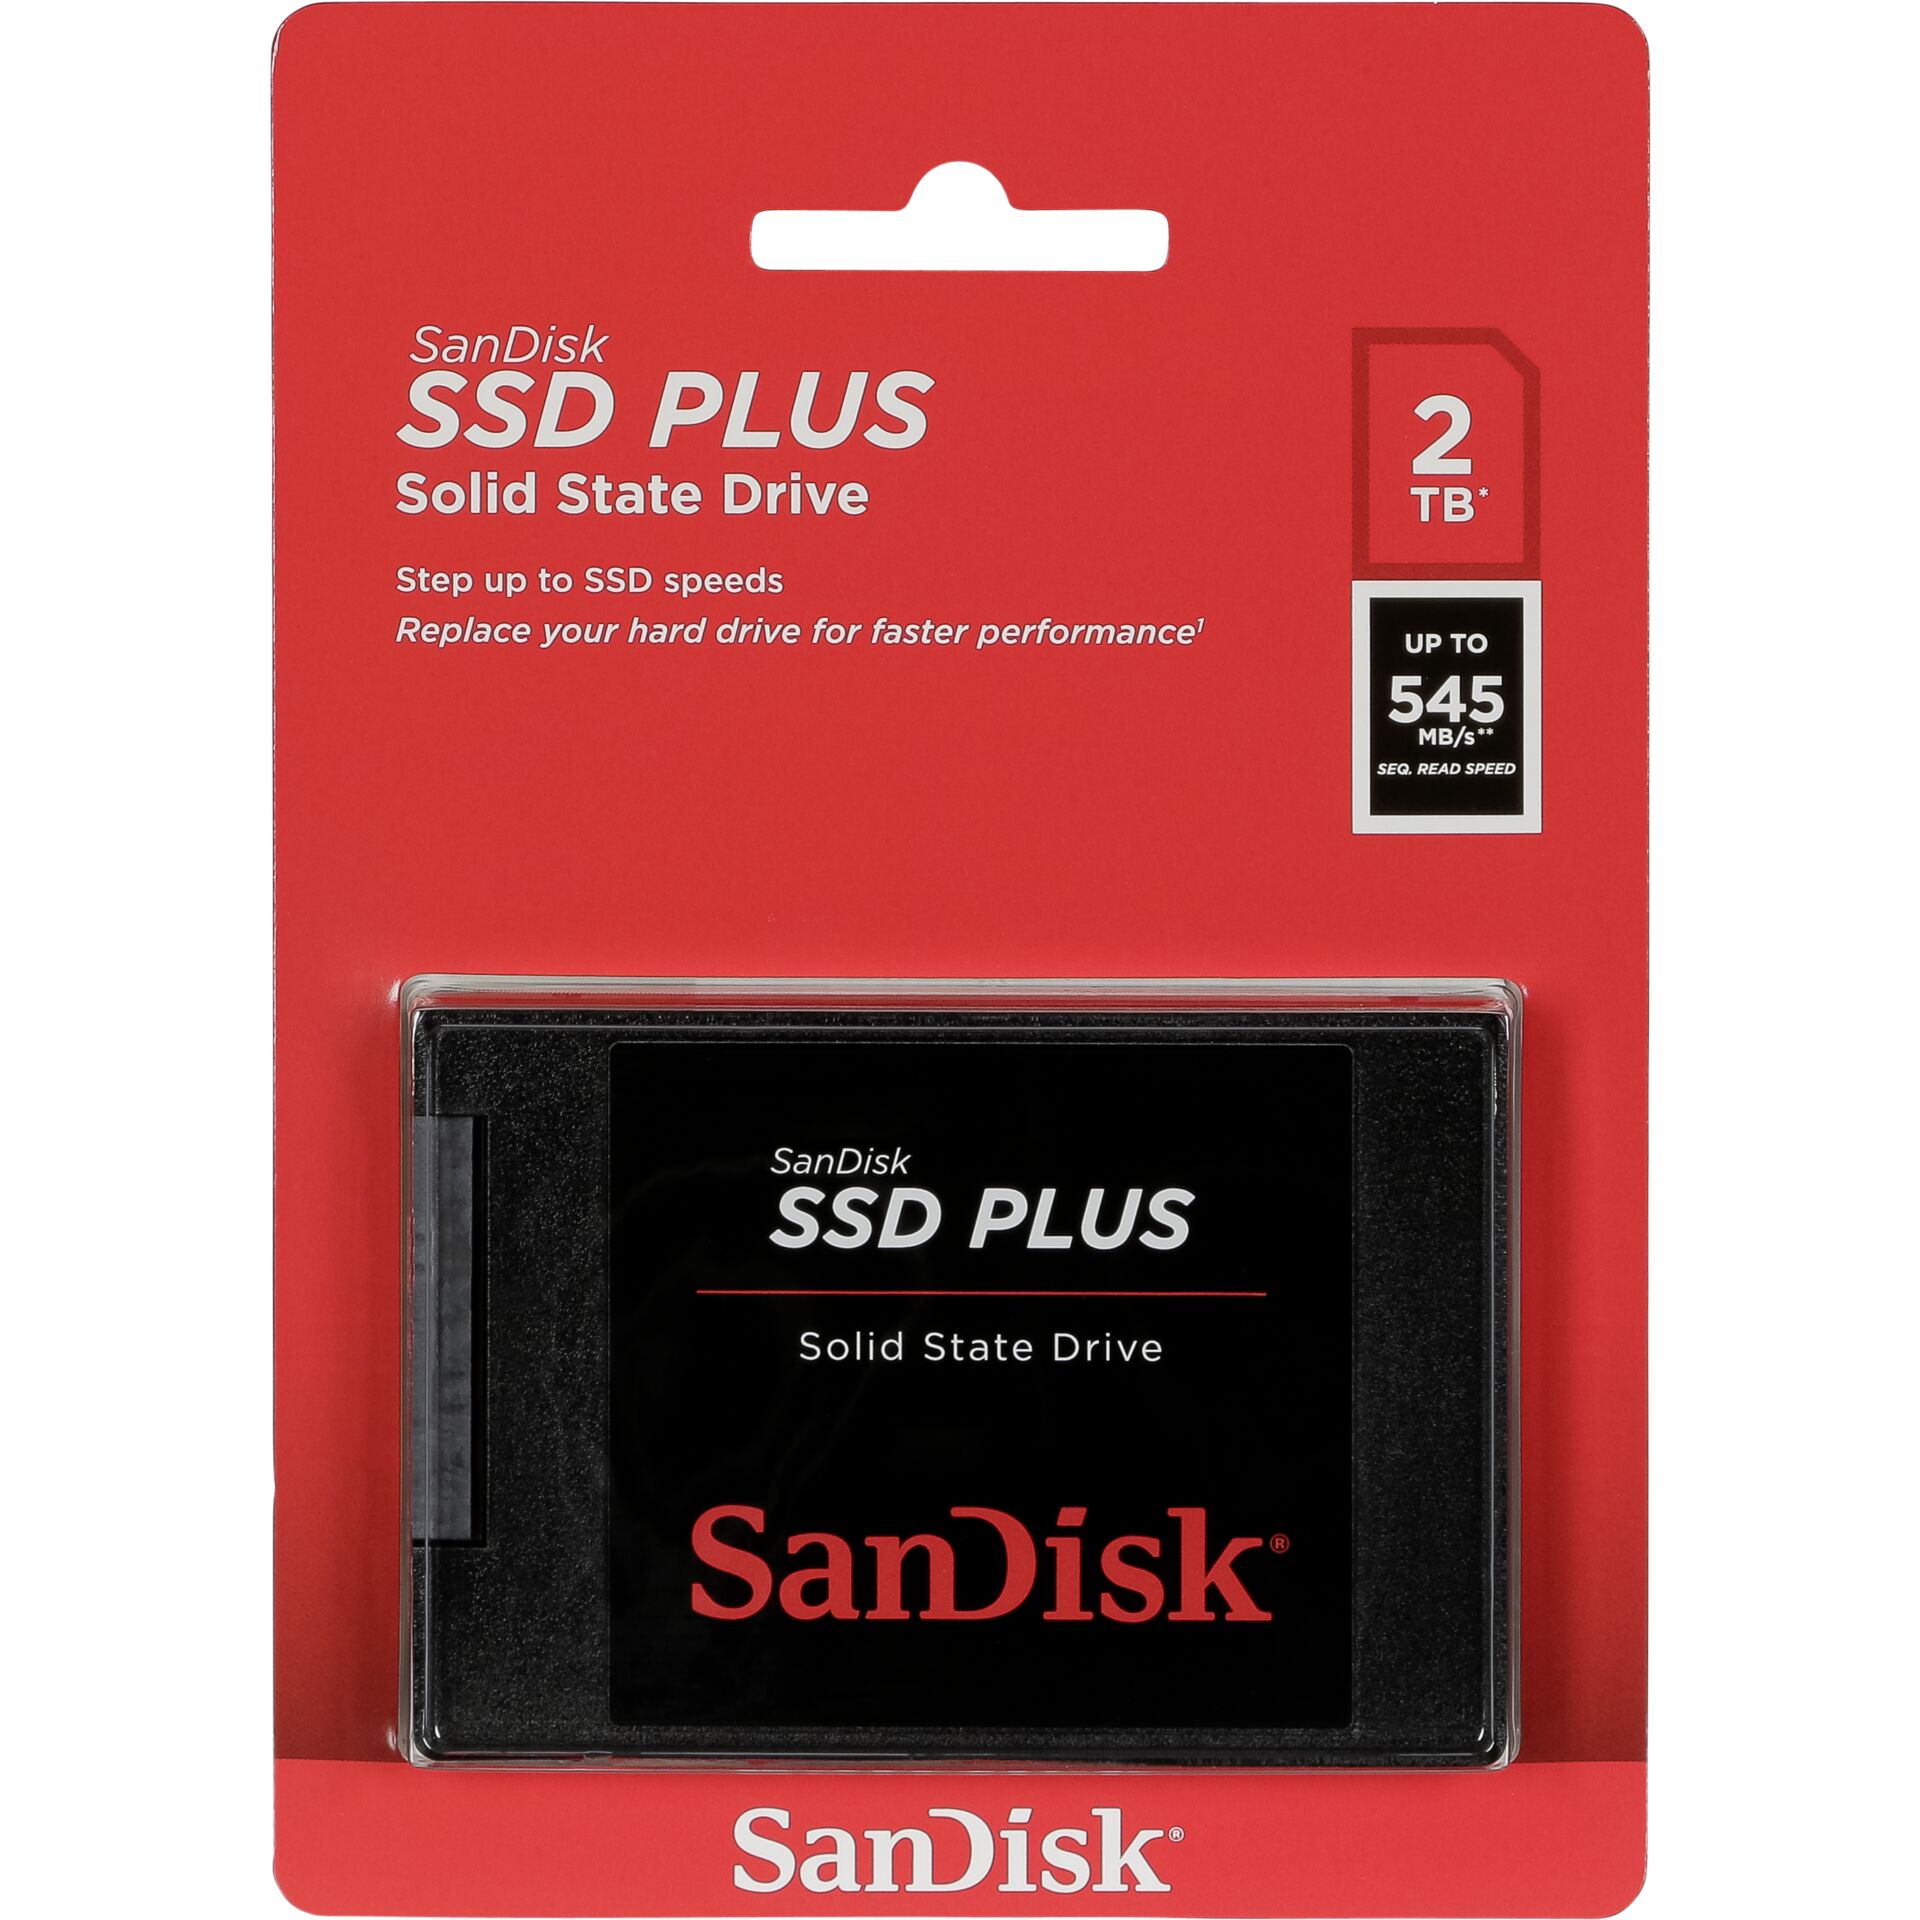 2.0 TB SSD SanDisk SSD Plus, SATA 6Gb/s, lesen: 545MB/s, schreiben: 450MB/s